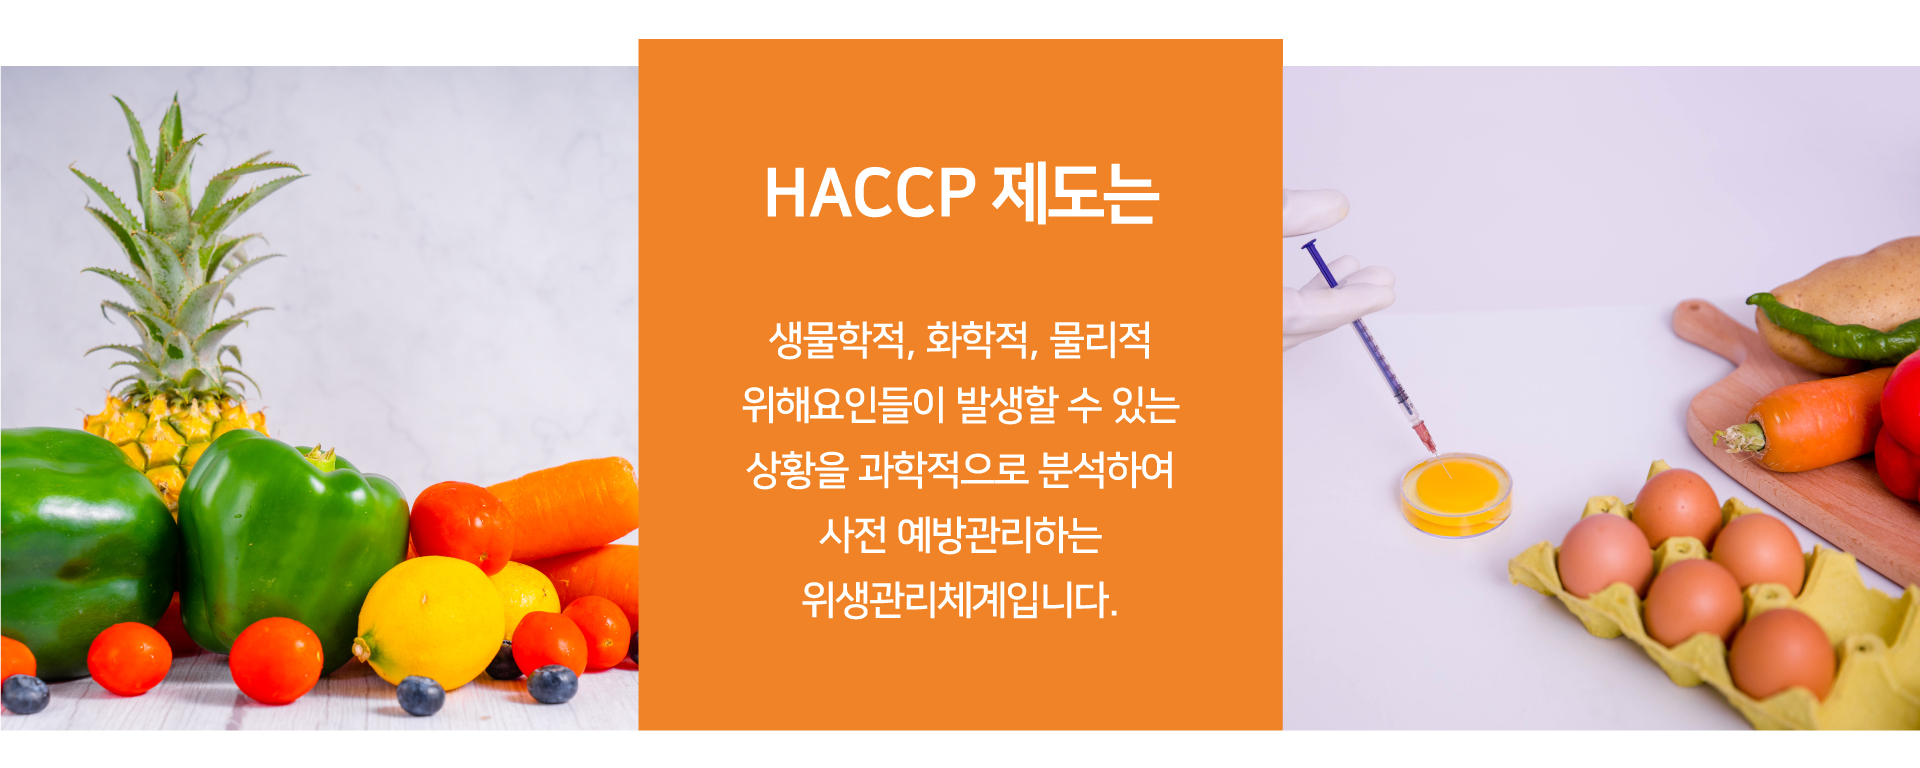 HACCP1-1-1